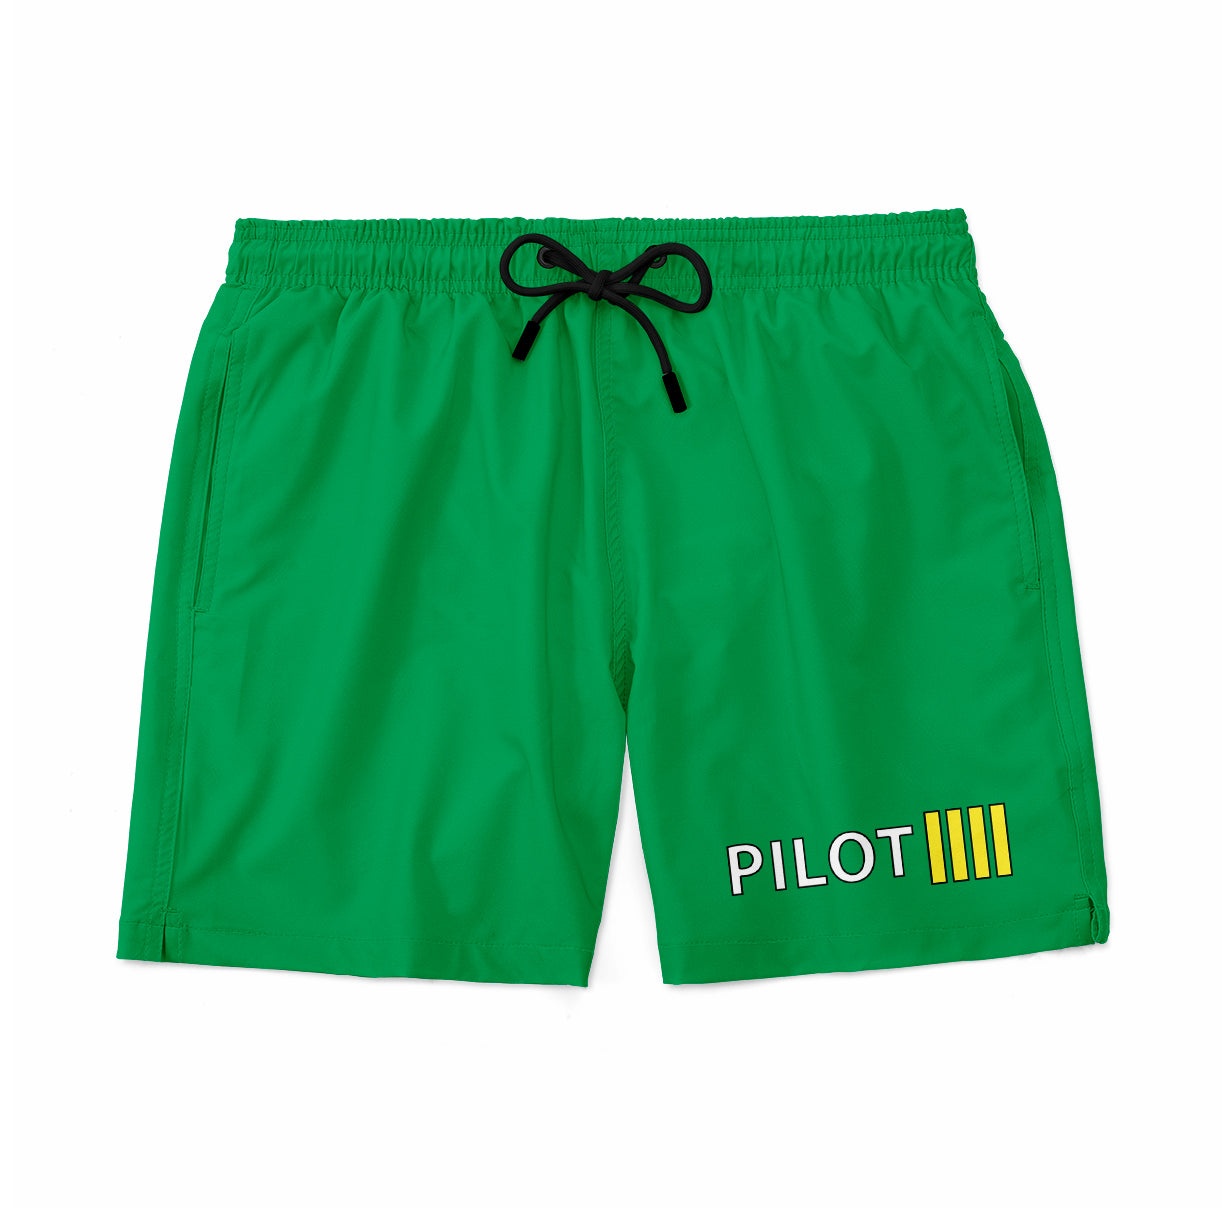 Pilot & Stripes (4 Lines) Designed Swim Trunks & Shorts